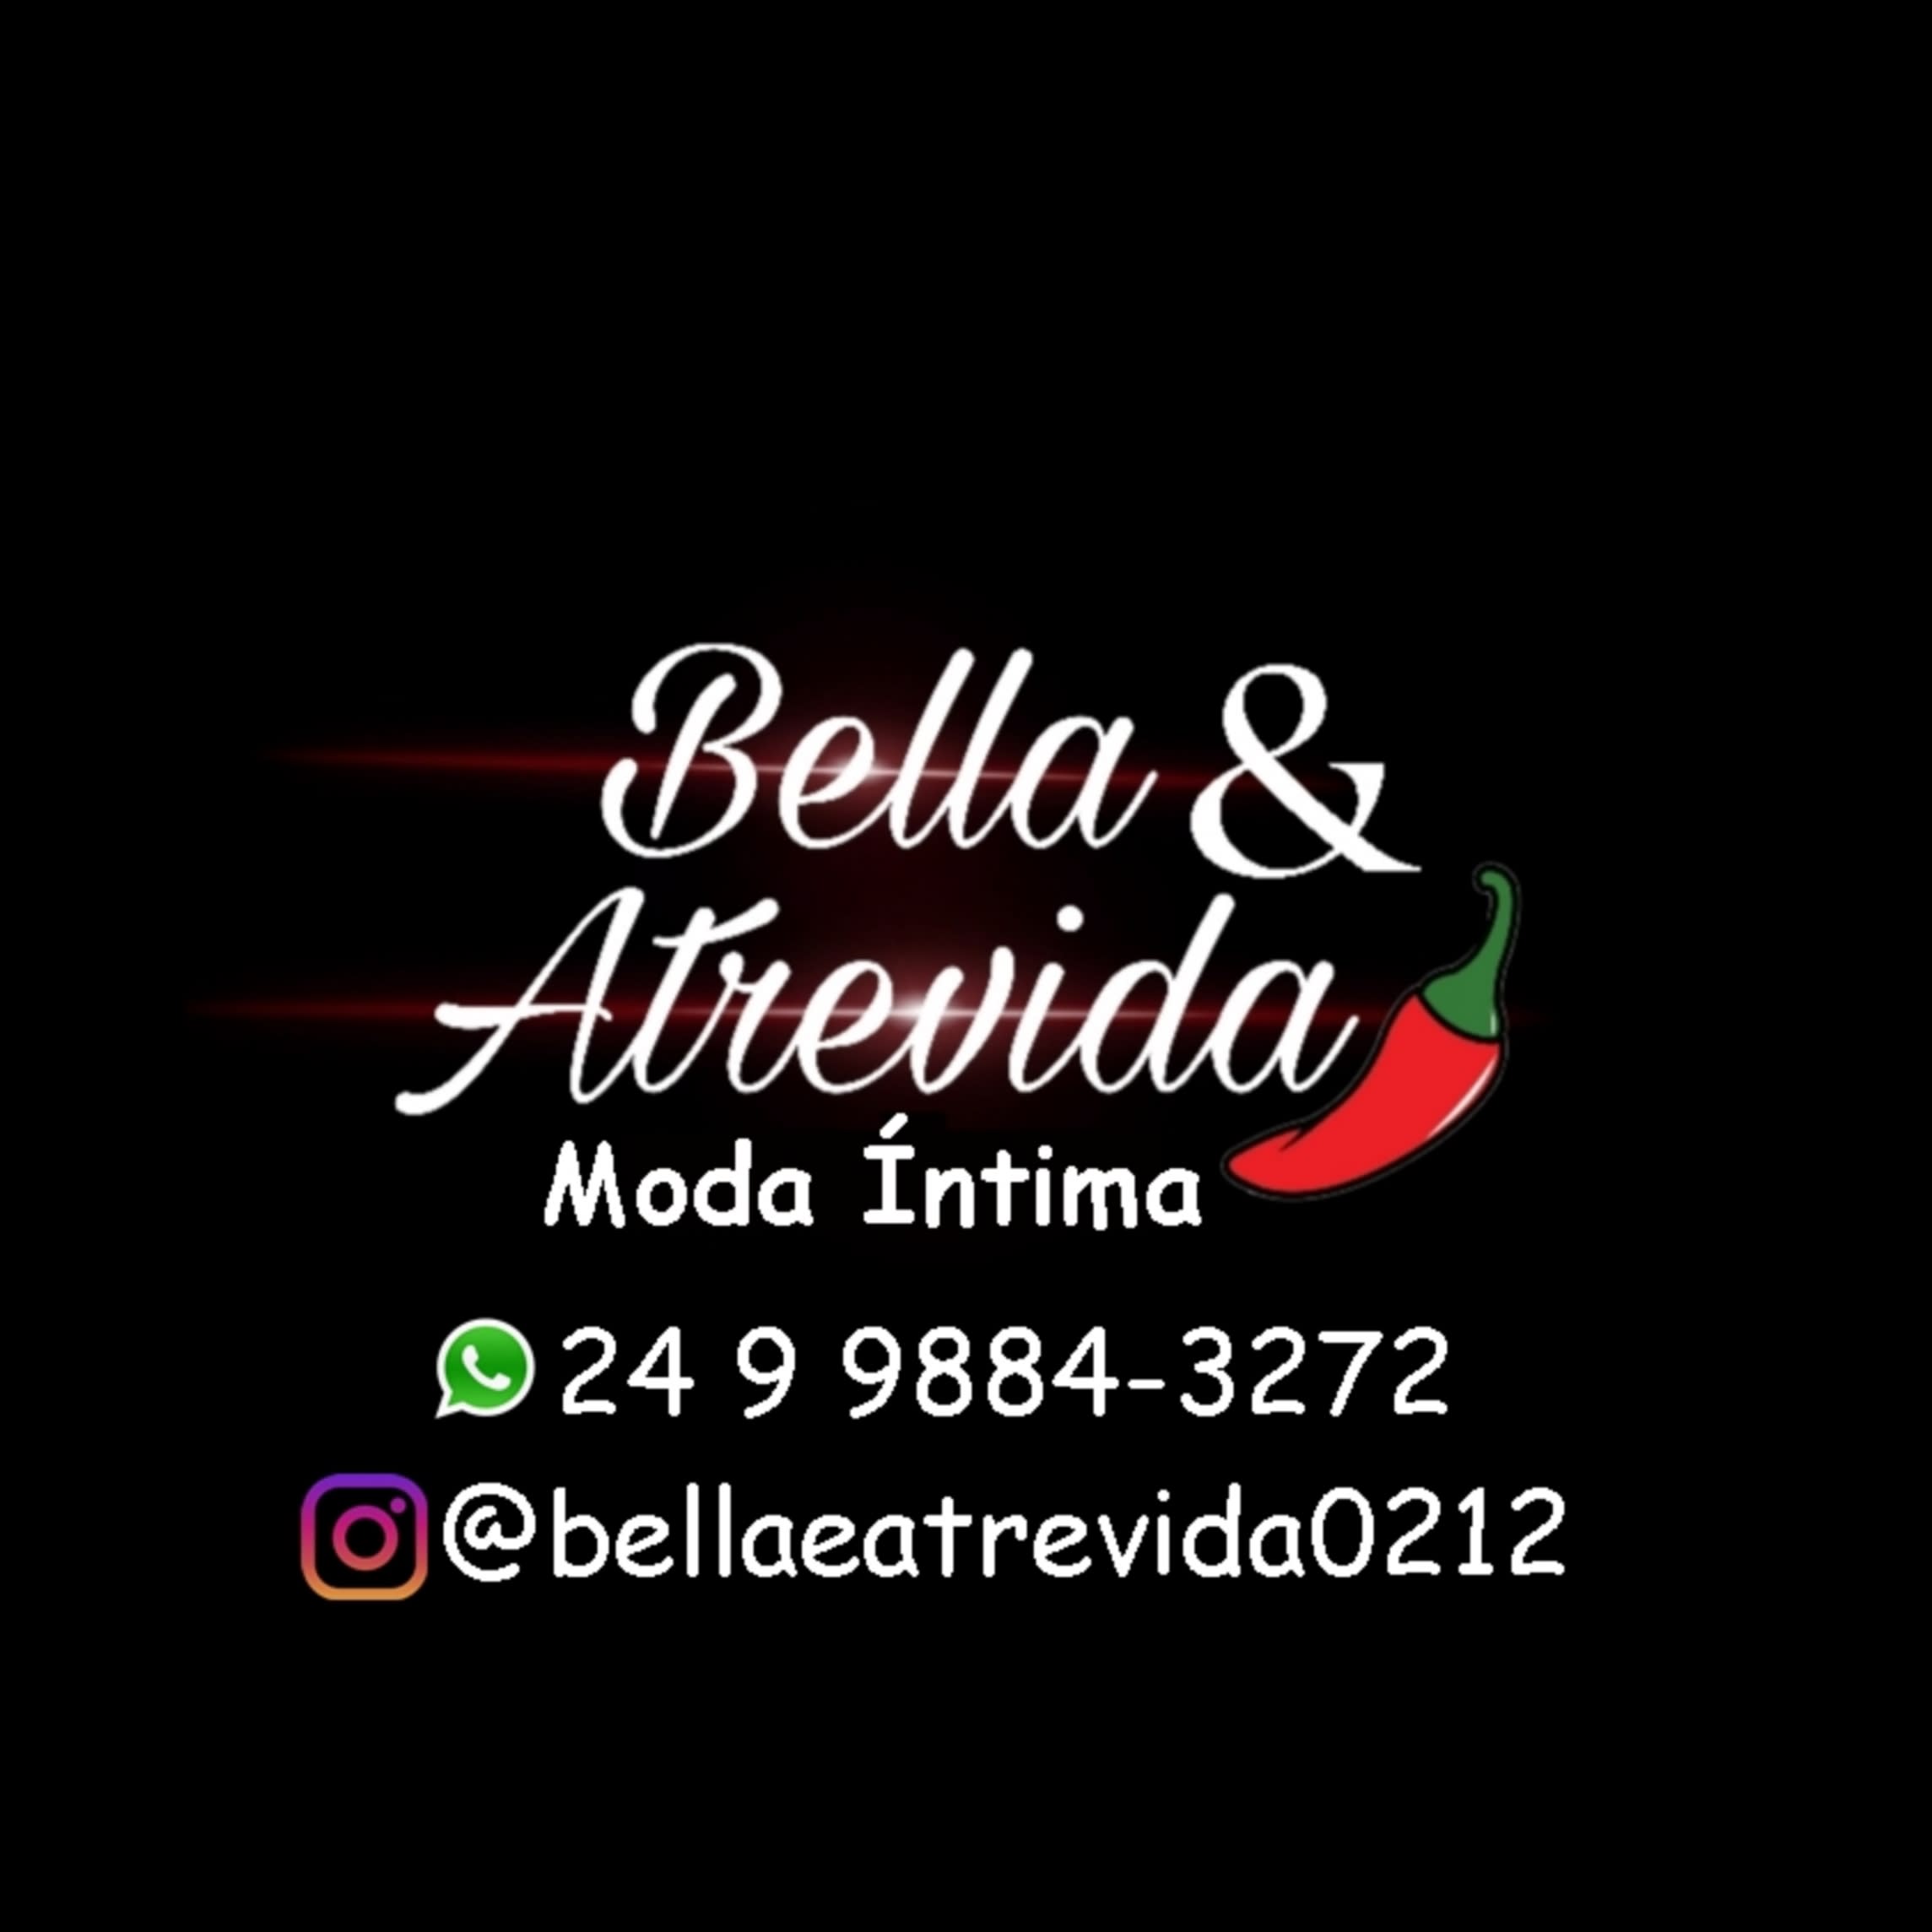 Bella & Atrevida